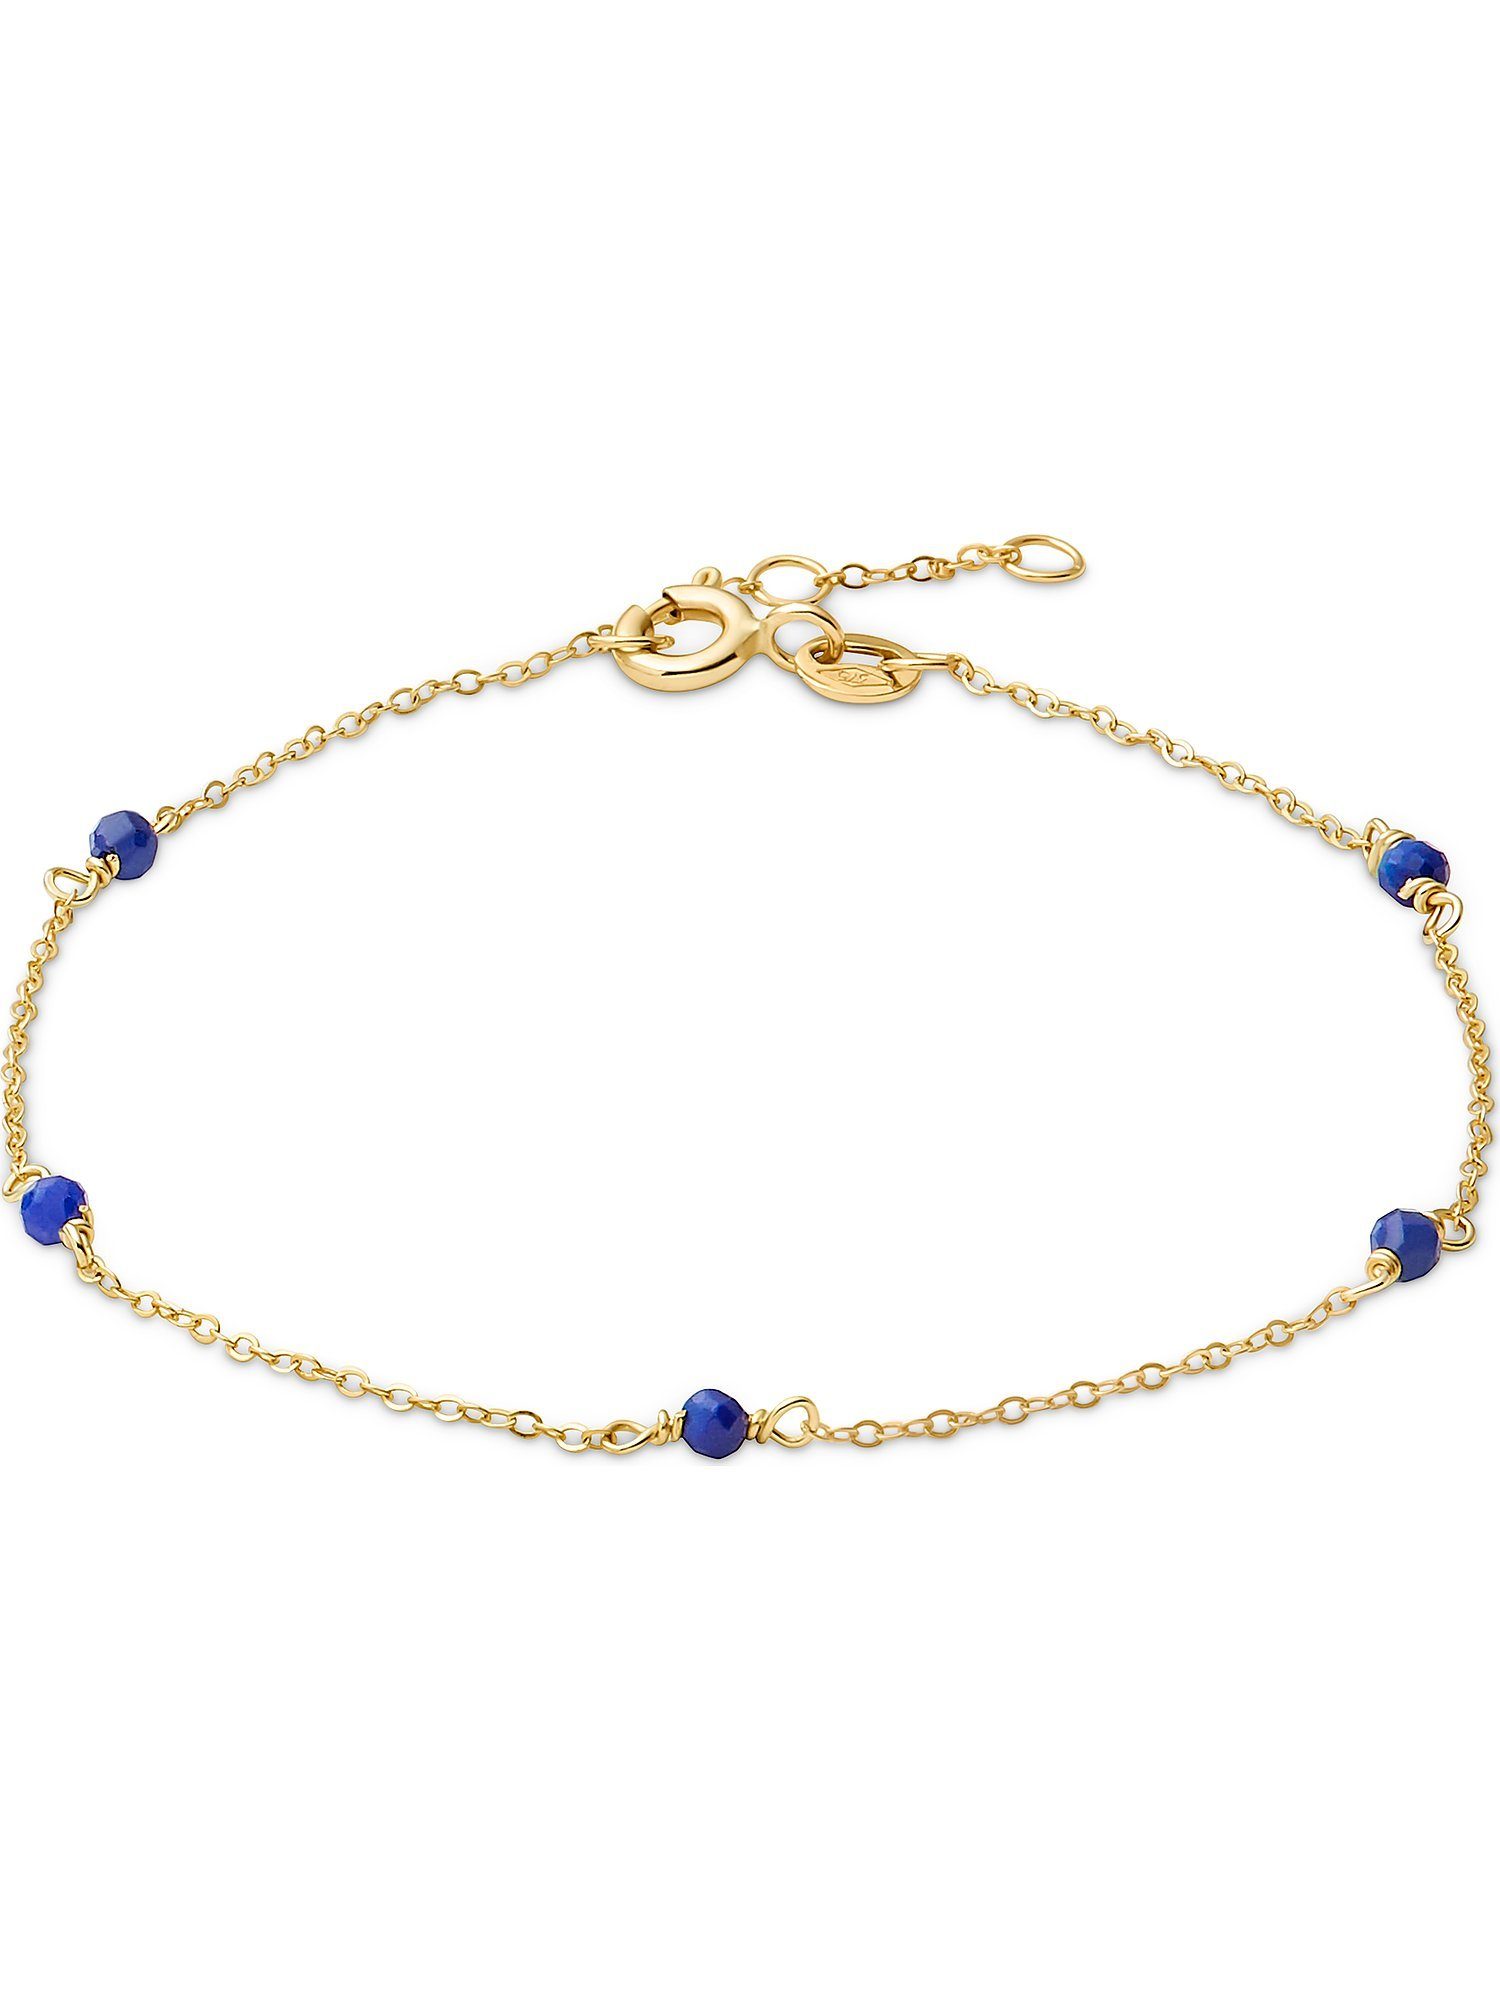 CHRIST Goldarmband »CHRIST Damen-Armband 375er Gelbgold 5 Lapis«, modern  online kaufen | OTTO